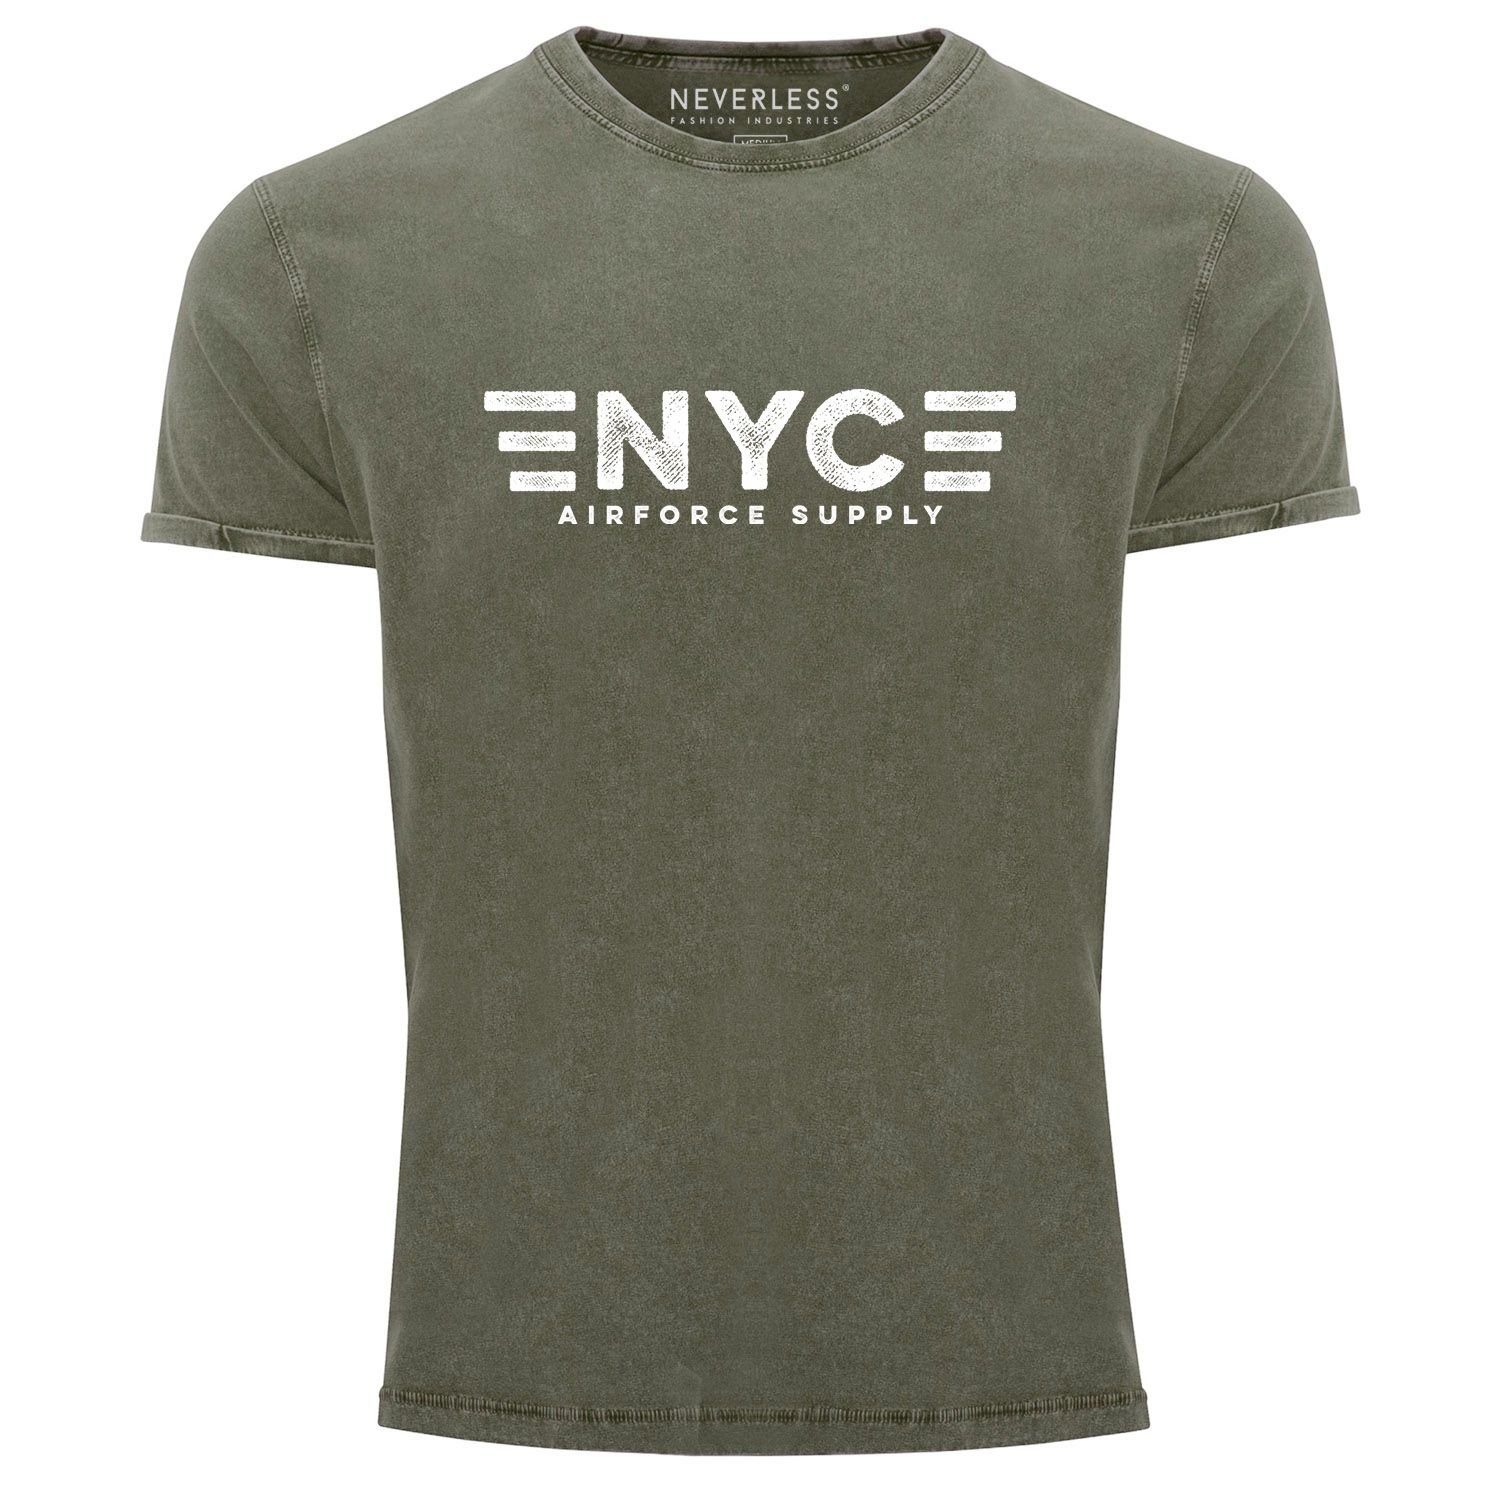 Neverless Print-Shirt Herren Vintage Shirt Aufdruck NYC New York City Airforce Supply Print Printshirt T-Shirt Used Look Slim Fit Neverless® mit Print oliv